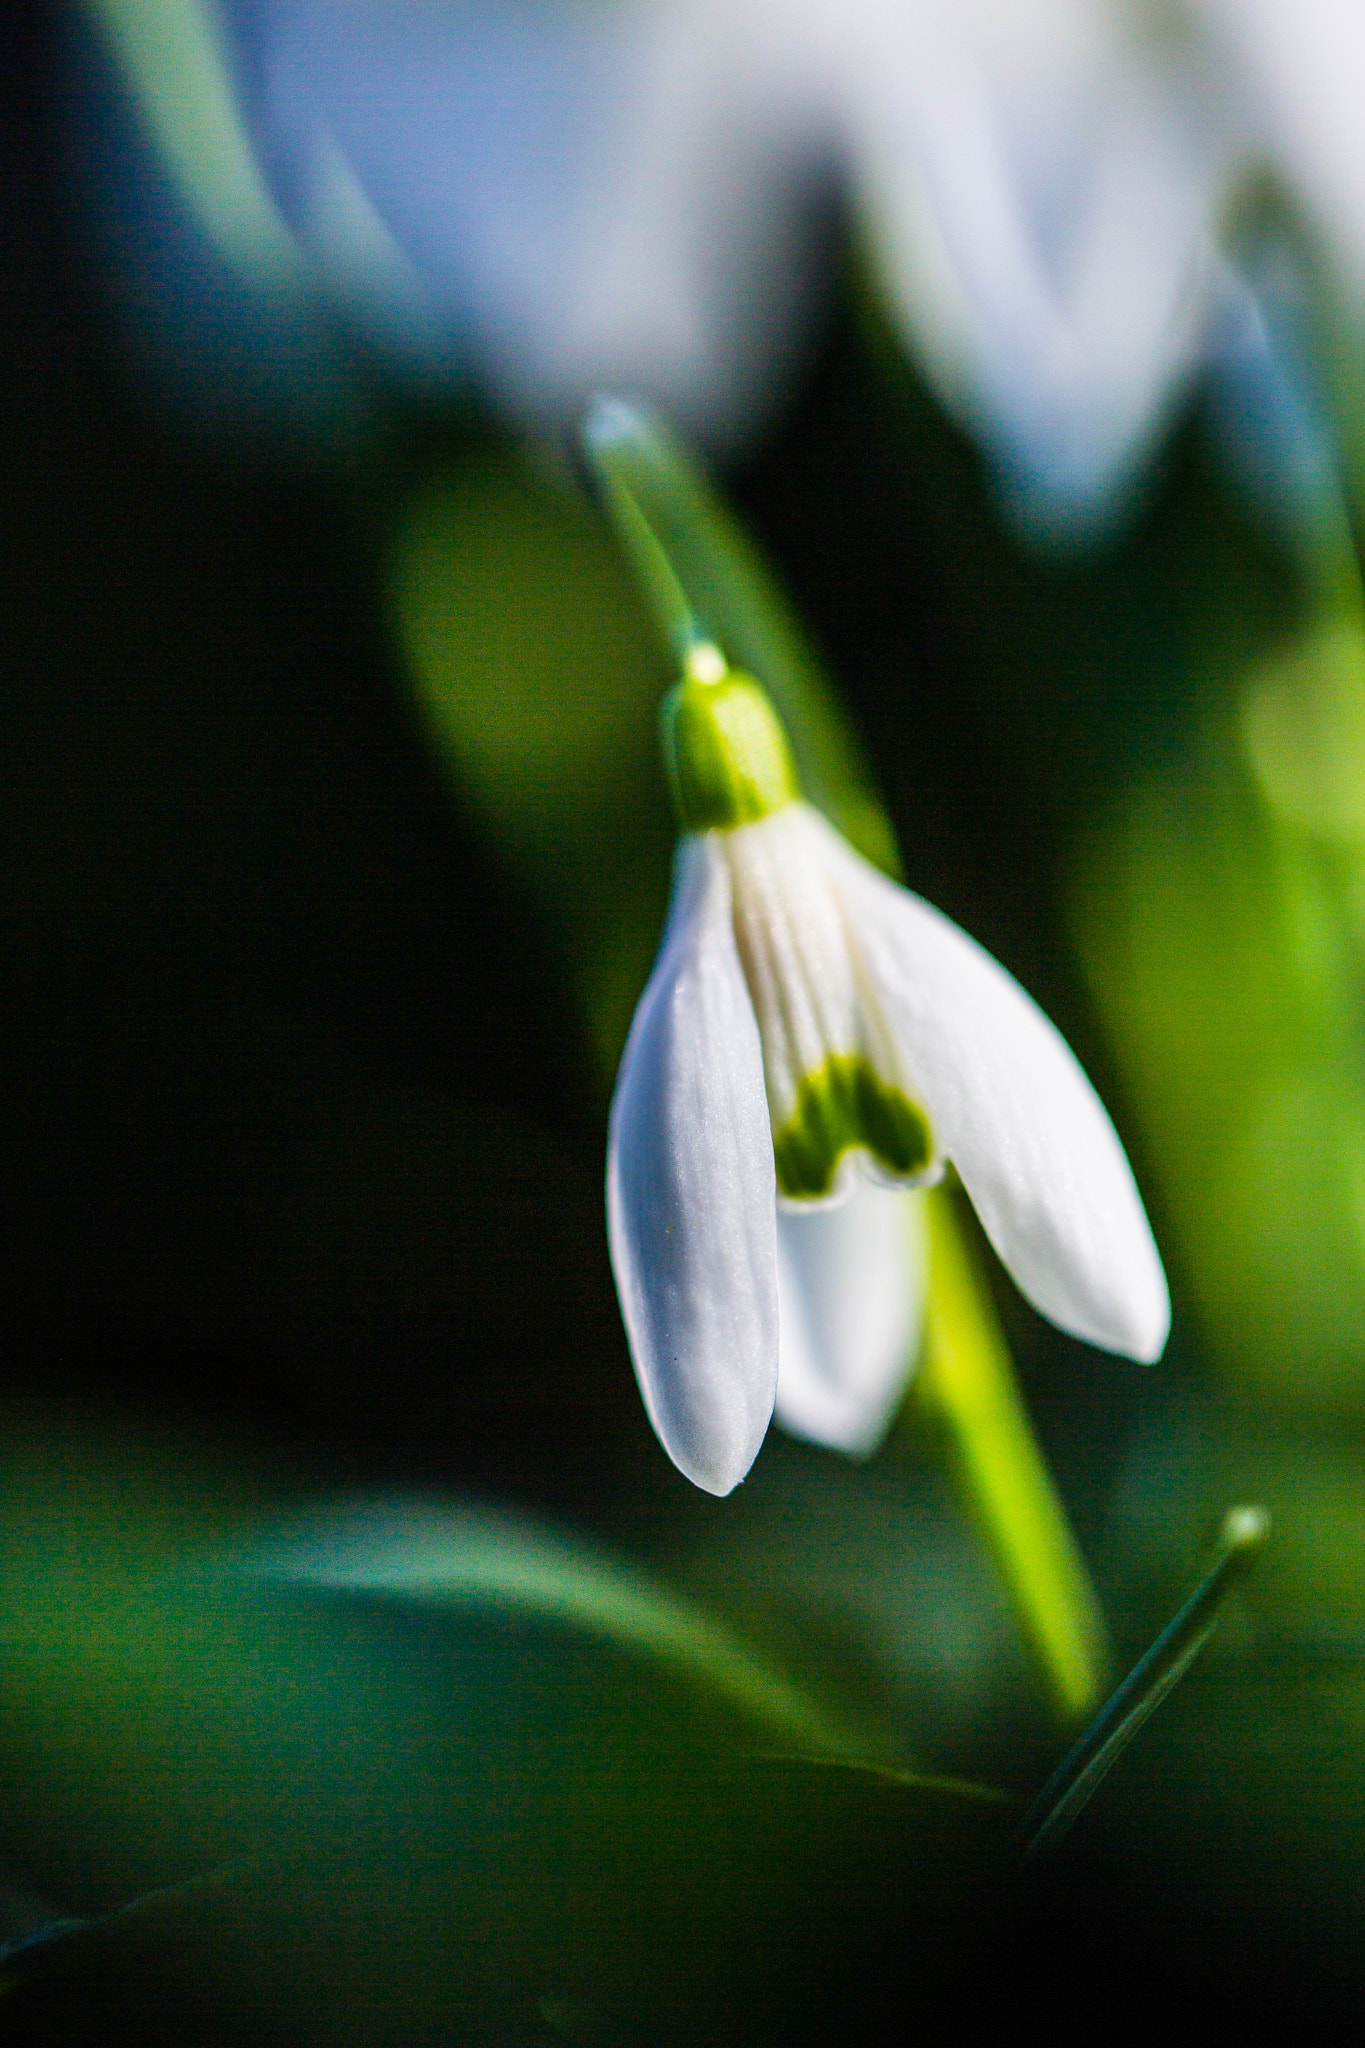 Spring Flowers - Snowdrop